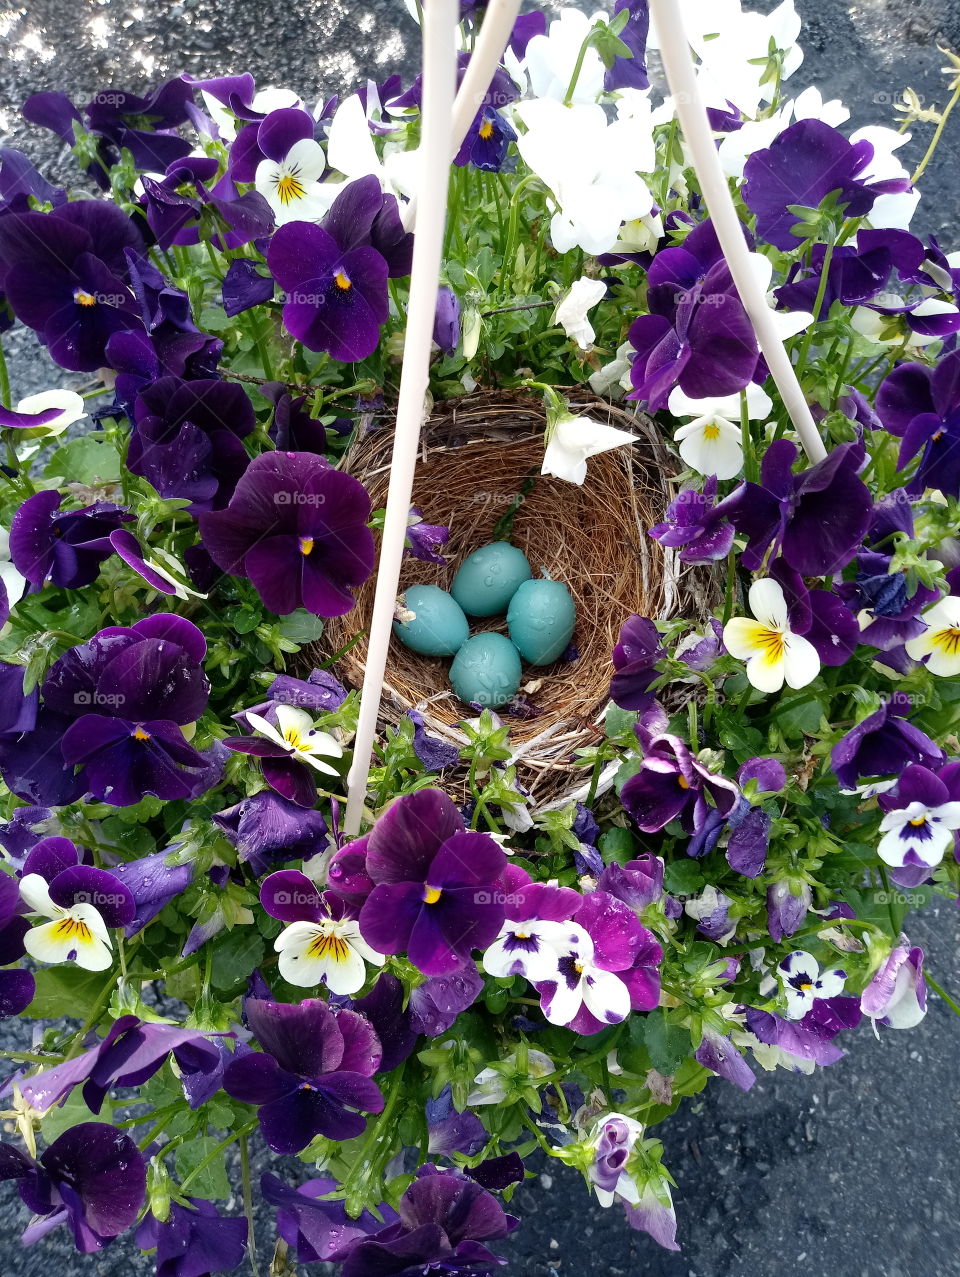 purple pansy flower basket with blue eggs in birds nest